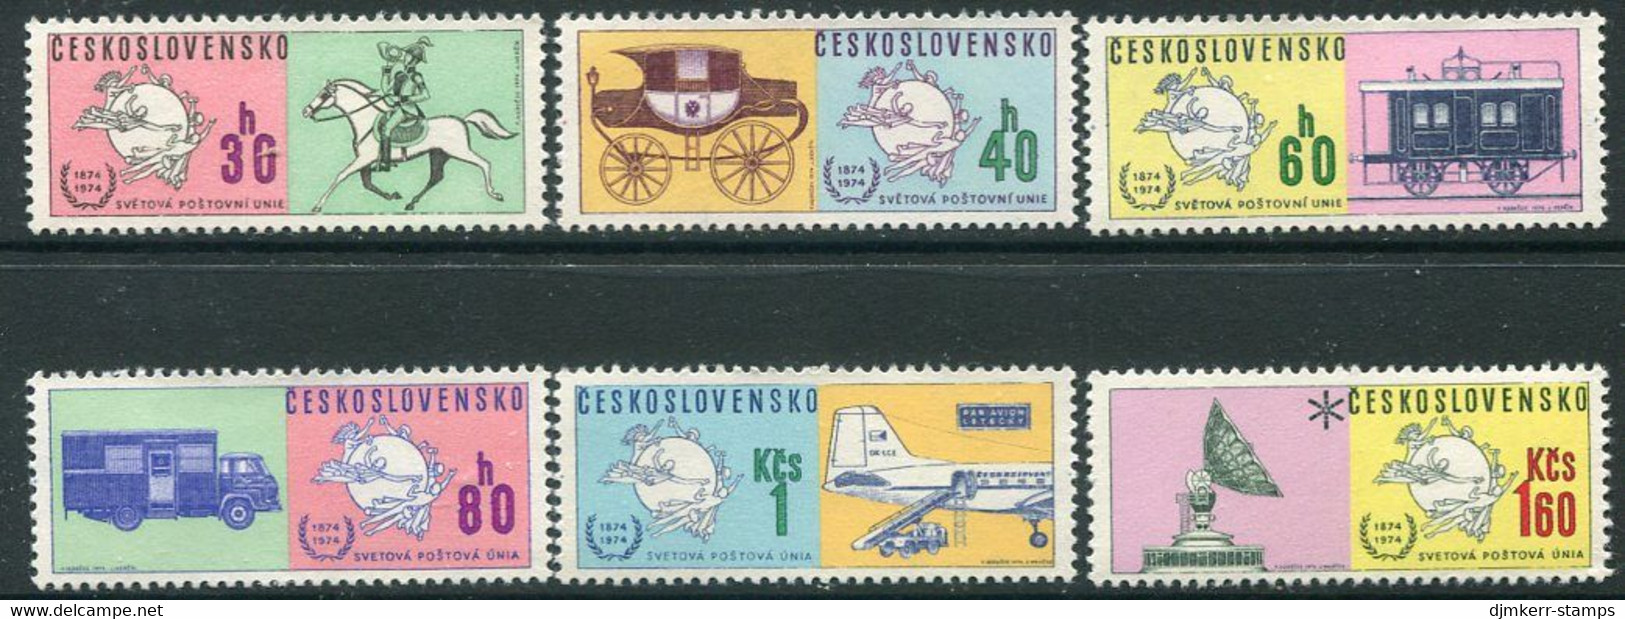 CZECHOSLOVAKIA 1974 Universal Postal Union MNH / **  Michel 2222-27 - Nuovi